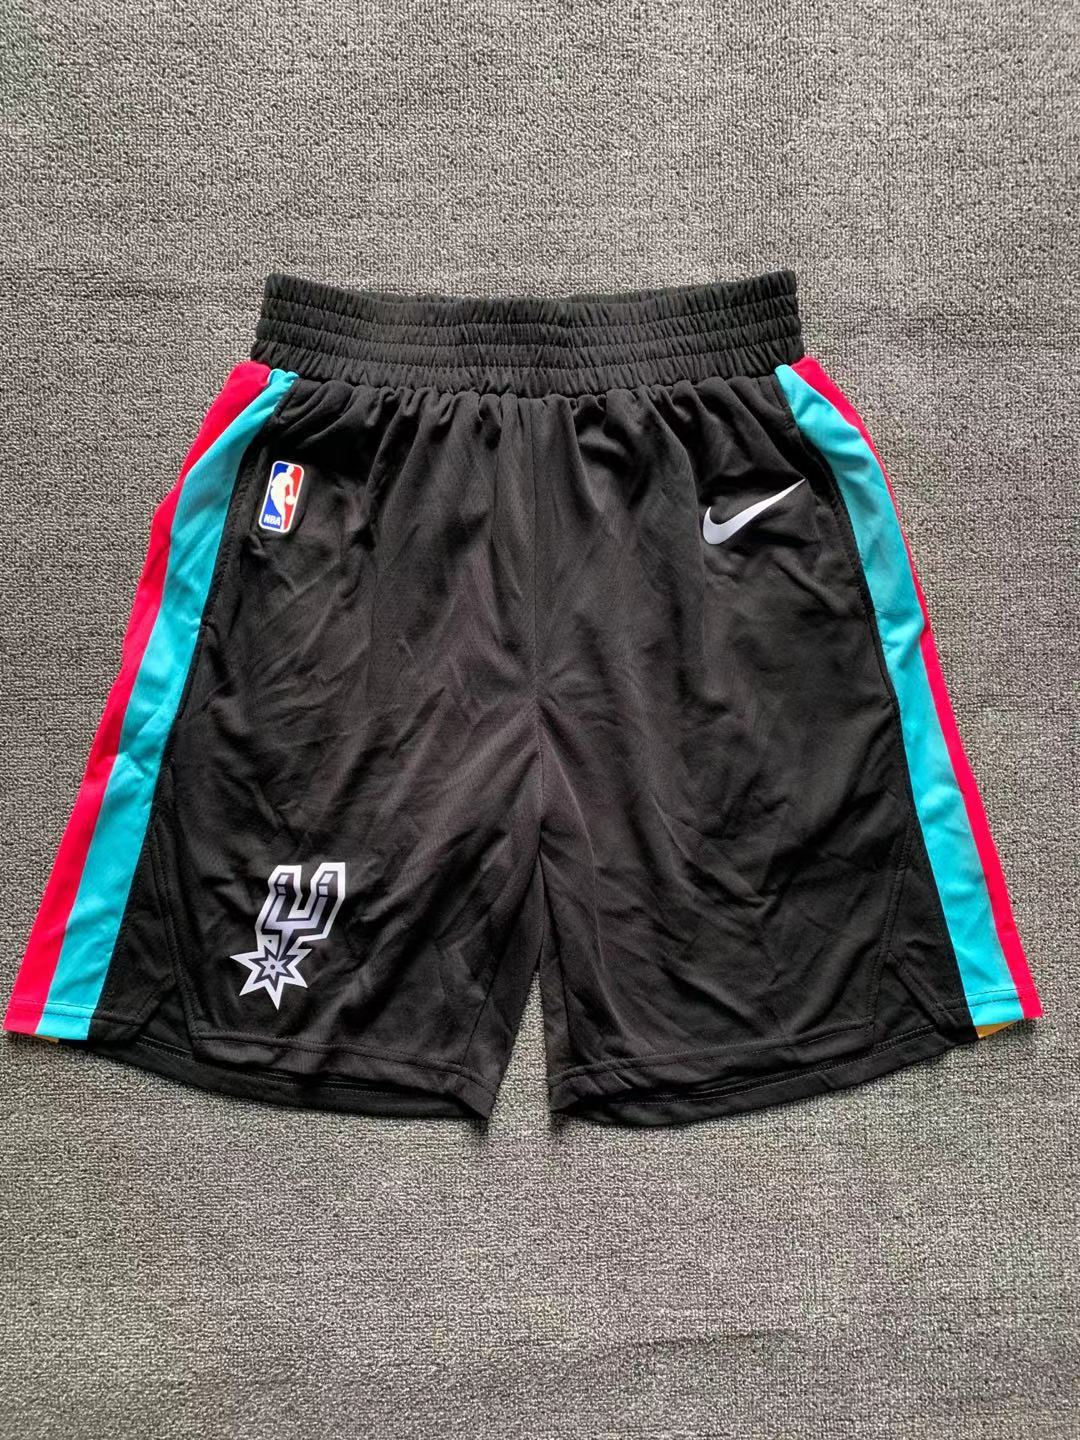 San Antonio Spurs shorts